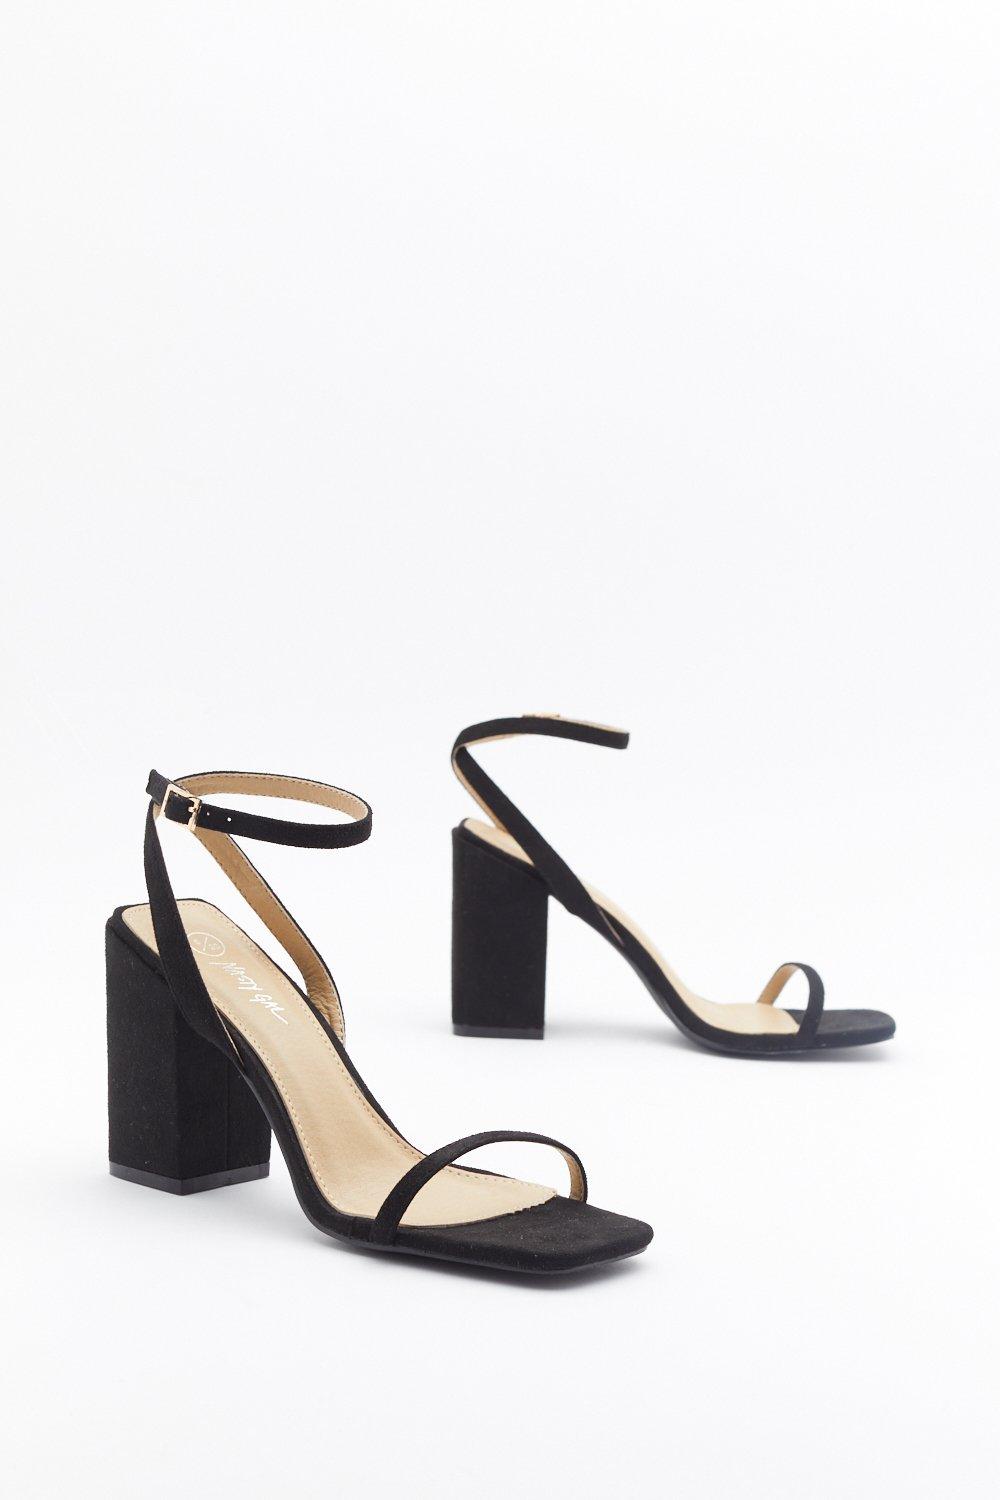 square sandal heel